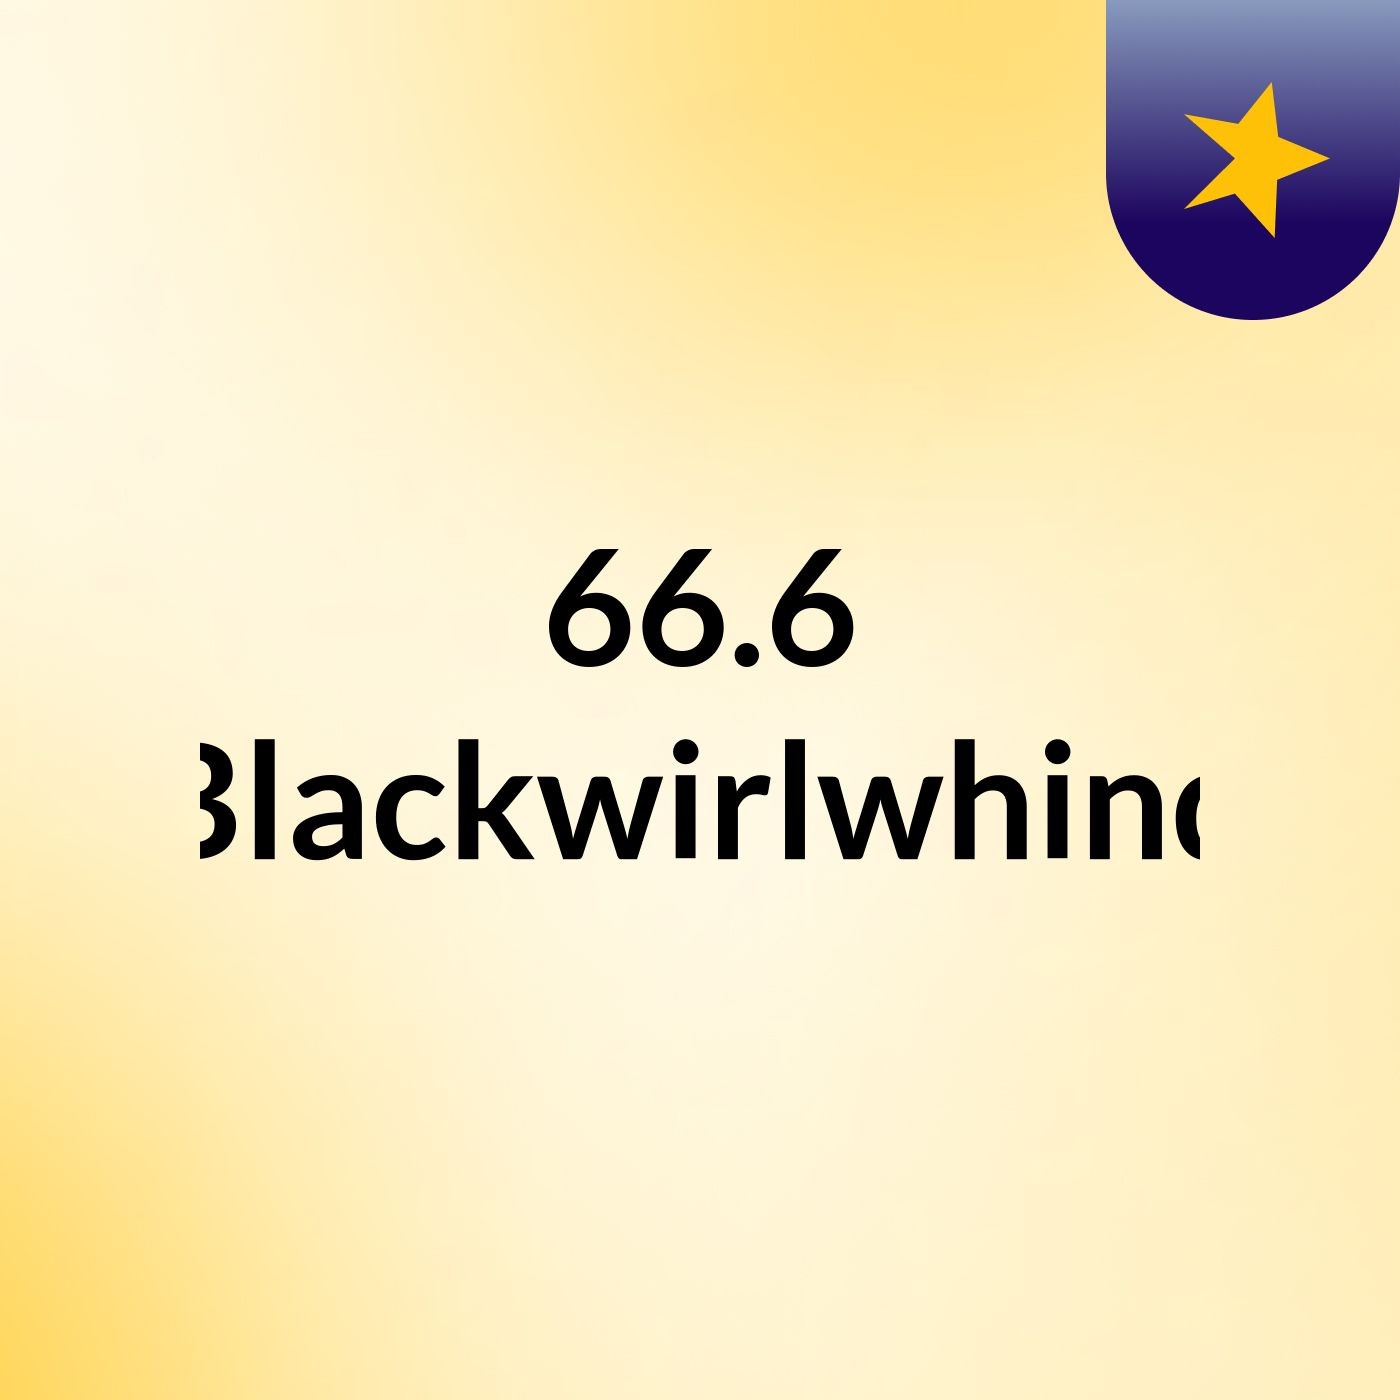 66.6 Blackwirlwhind